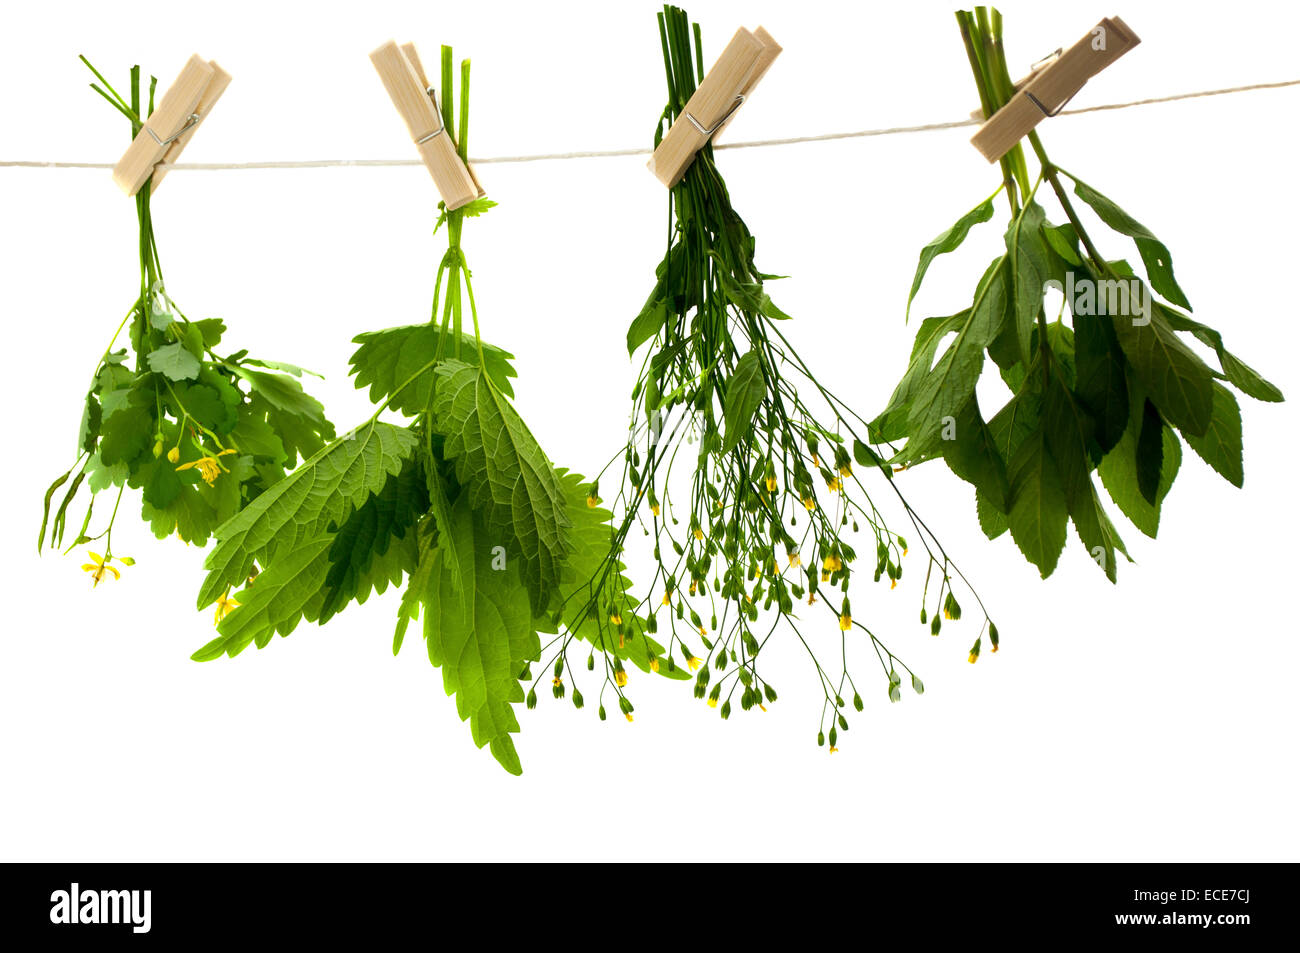 Herbs hanging upside-down Stock Photo: 76530514 - Alamy